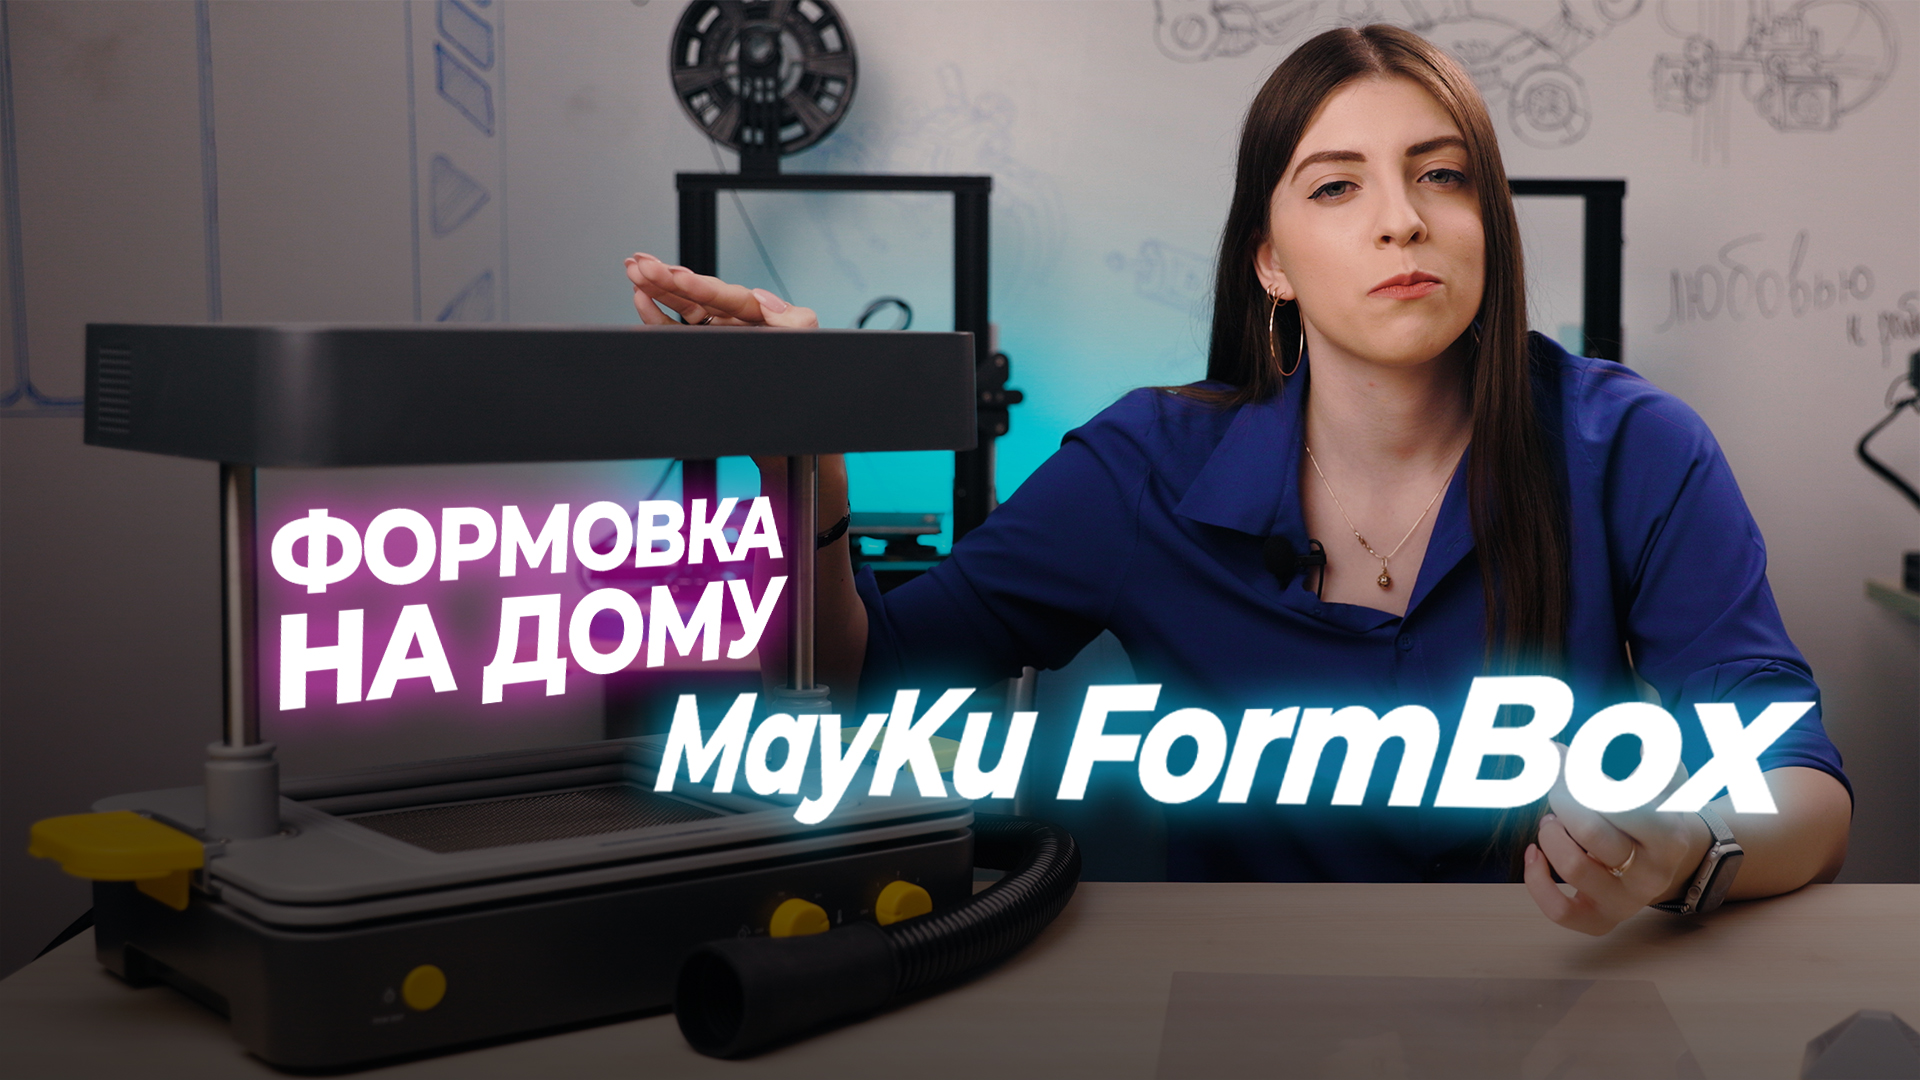 ВАКУУМНАЯ ФОРМОВКА ВМЕСТО 3D-ПЕЧАТИ || MayKu FormBox